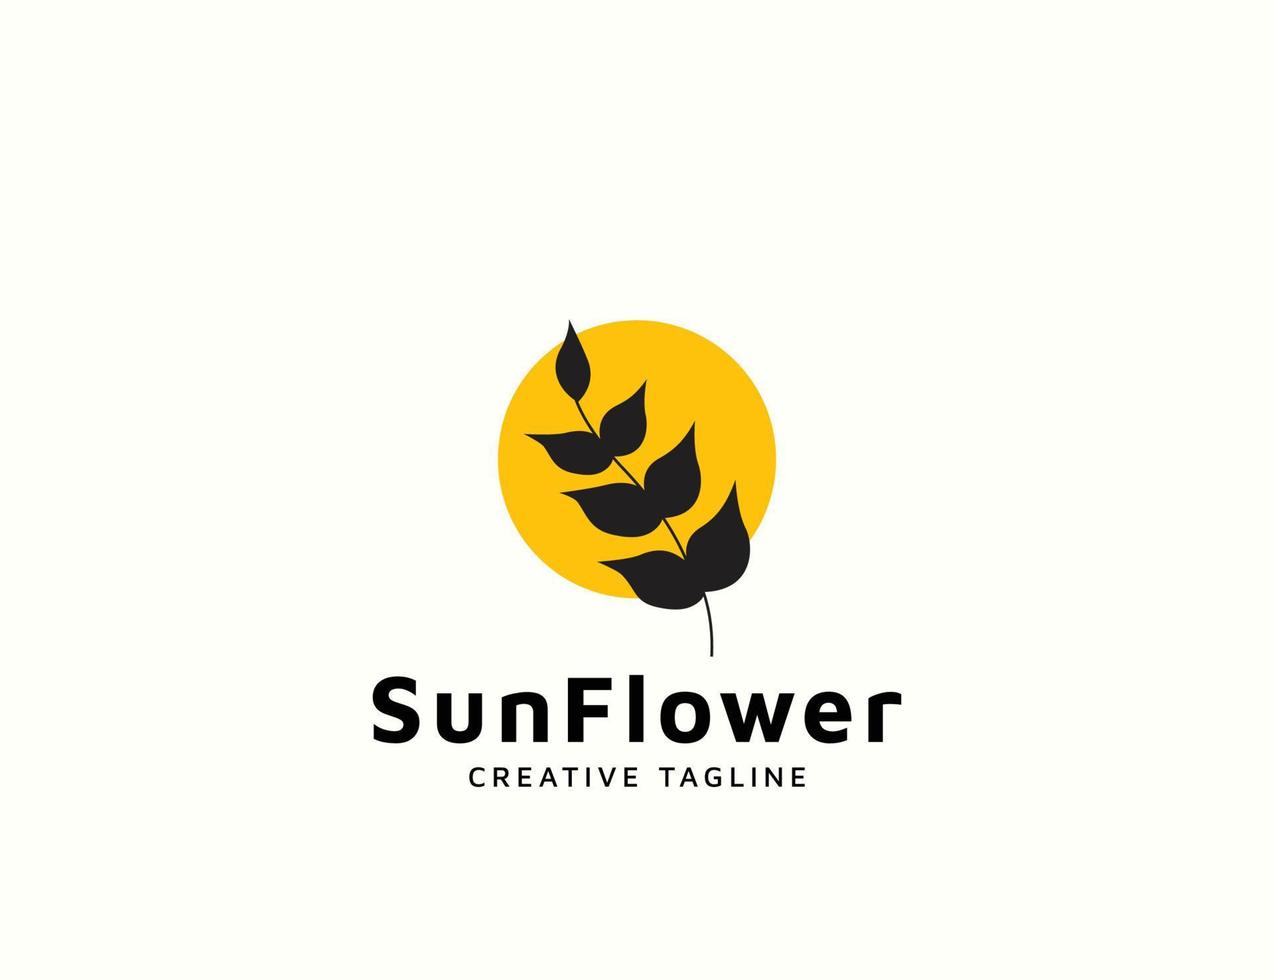 Flower logo with sun design vector